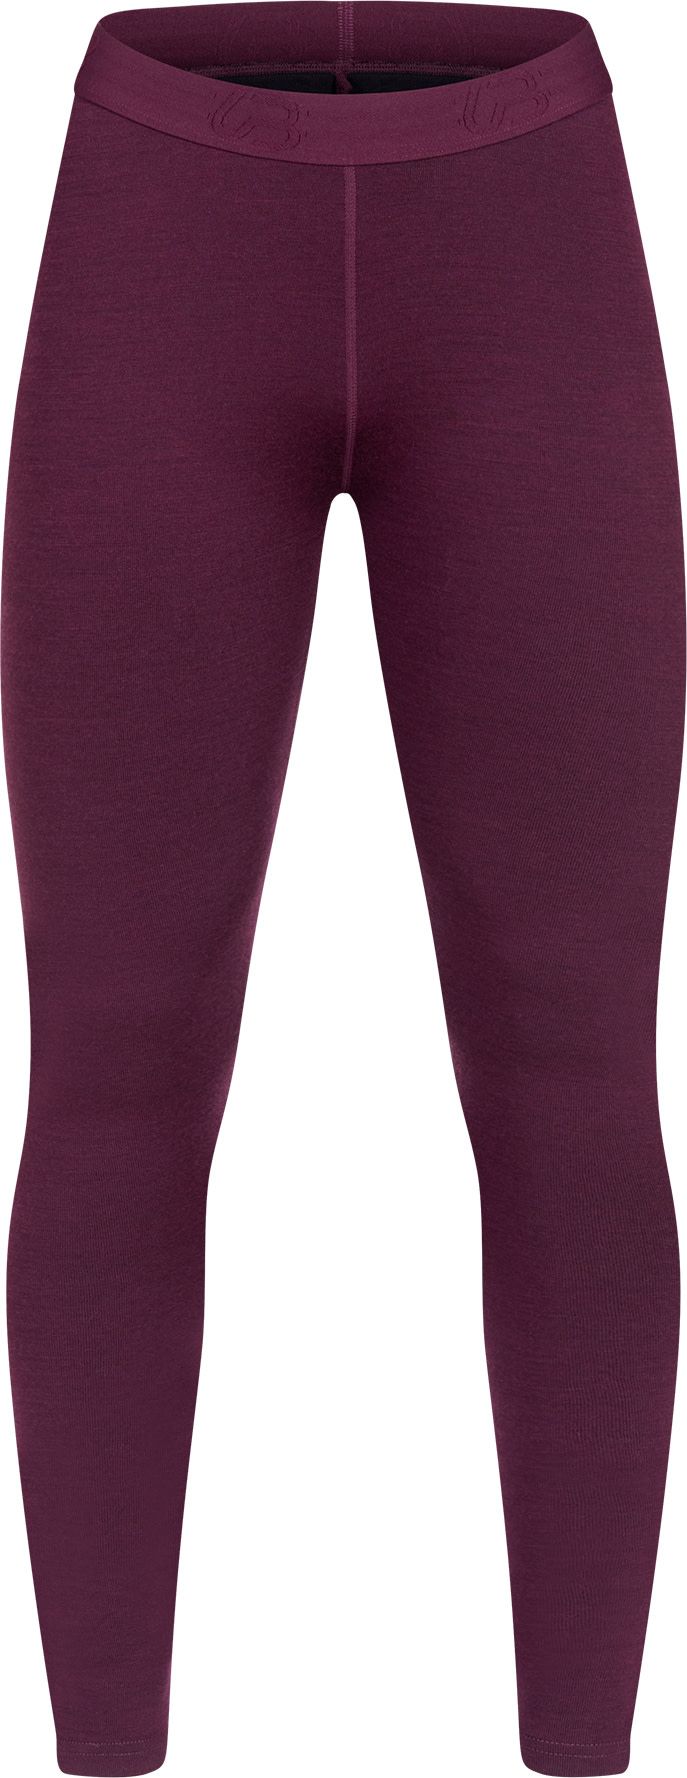 Women's Selje Merino-Bamboo Pants Potent Purple Urberg